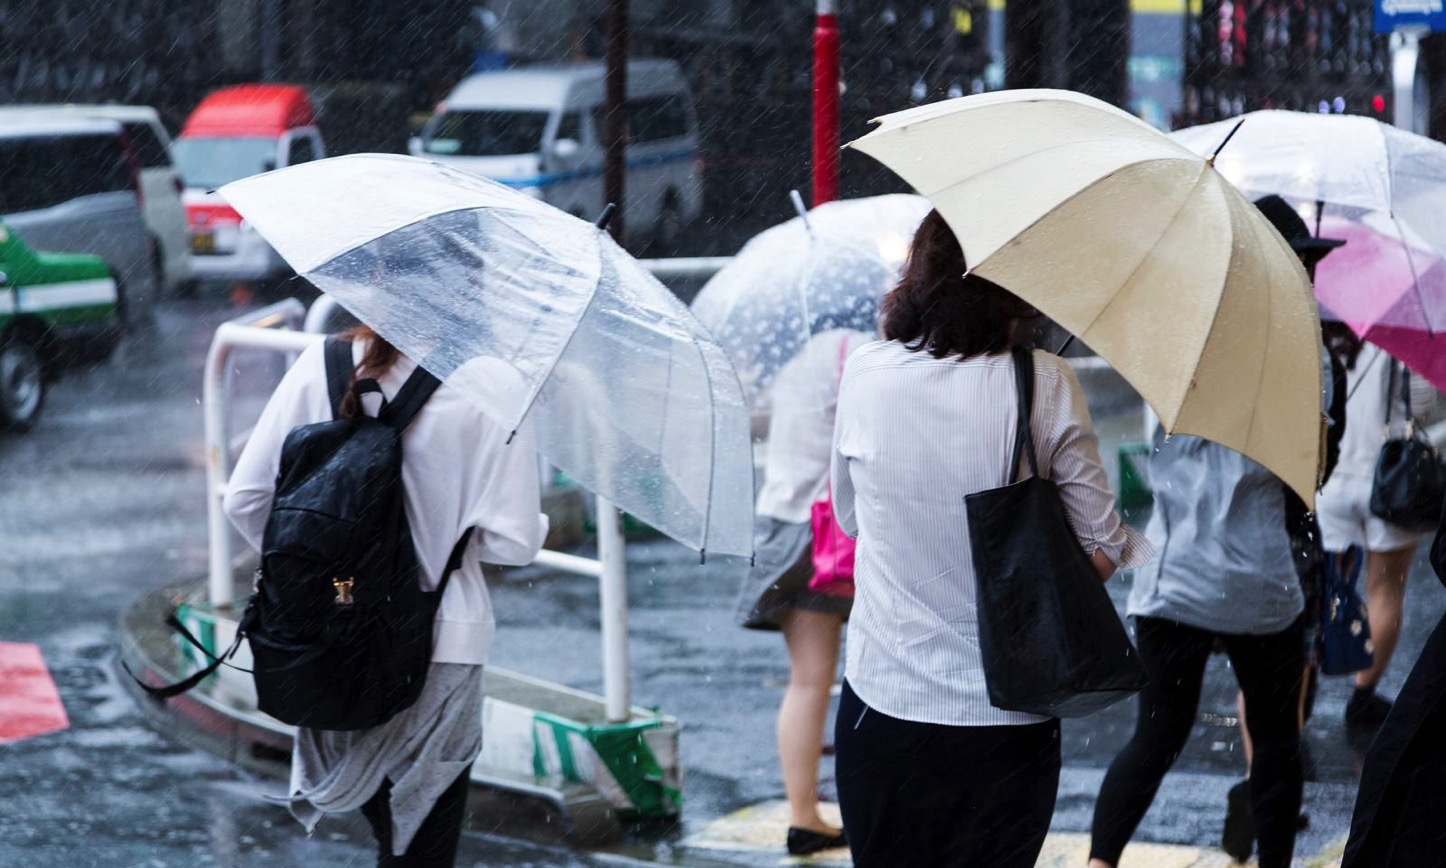 Using-an-umbrella-on-a-rainy-day.jpg